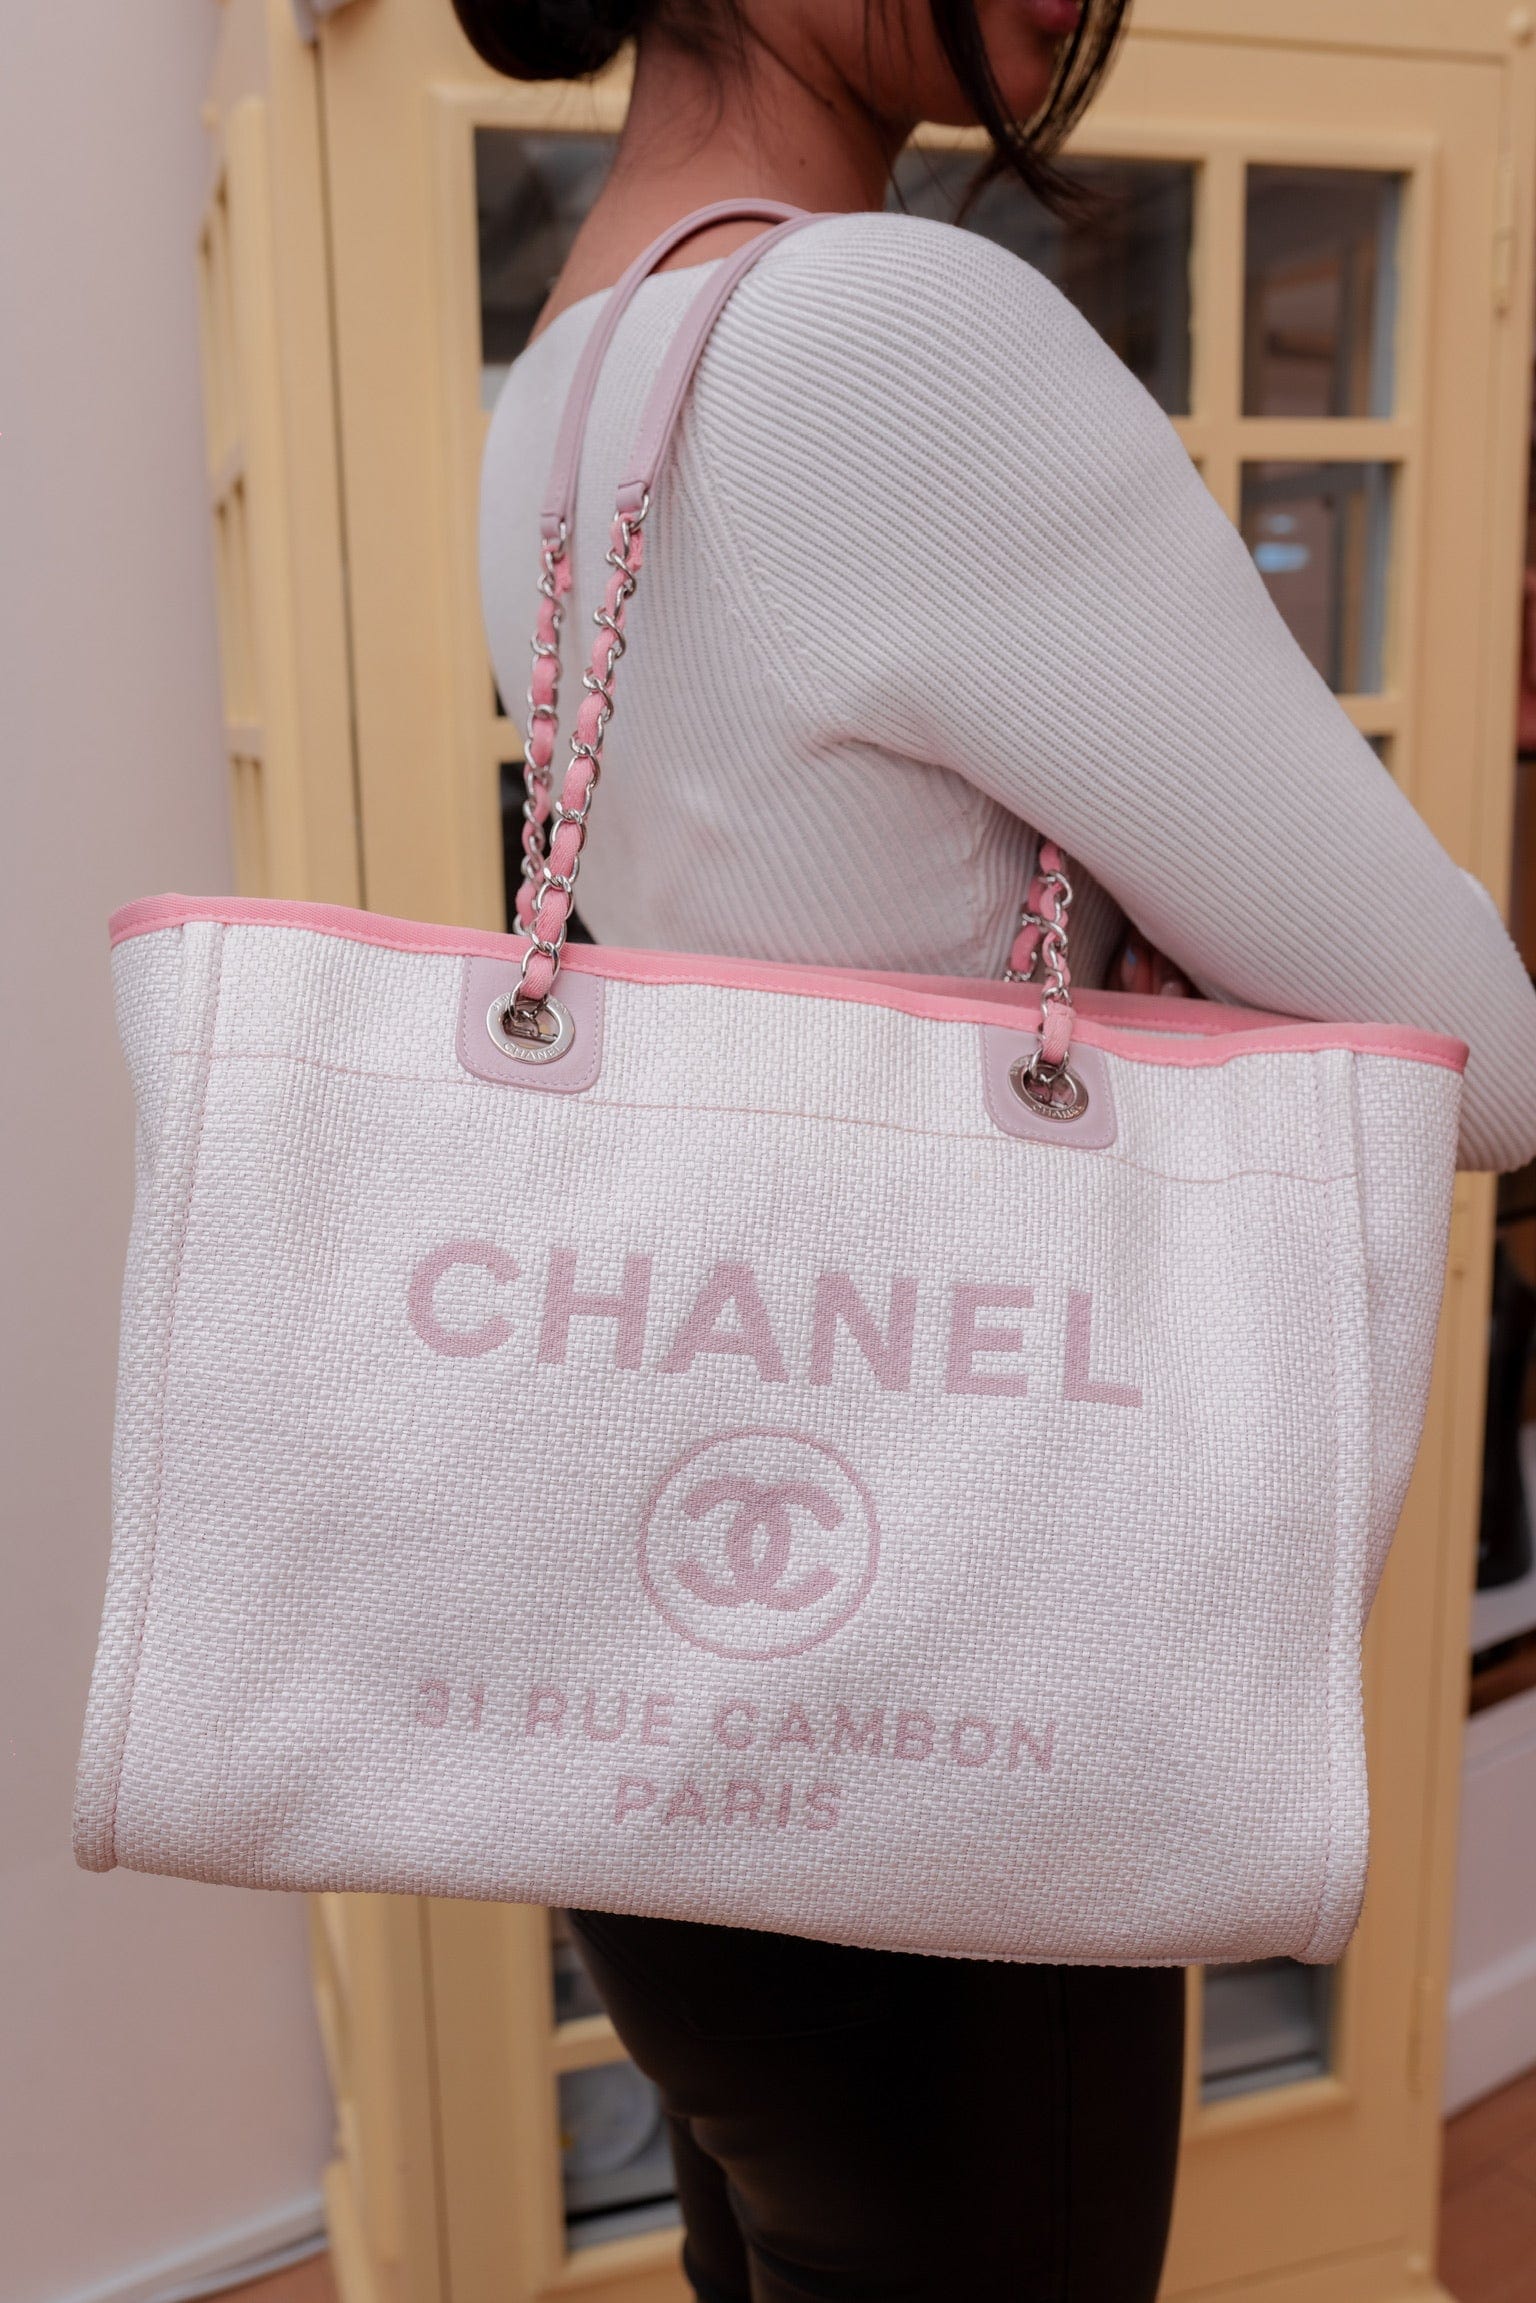 Chanel Chanel Small Deauville Pink Handbag RJL1341